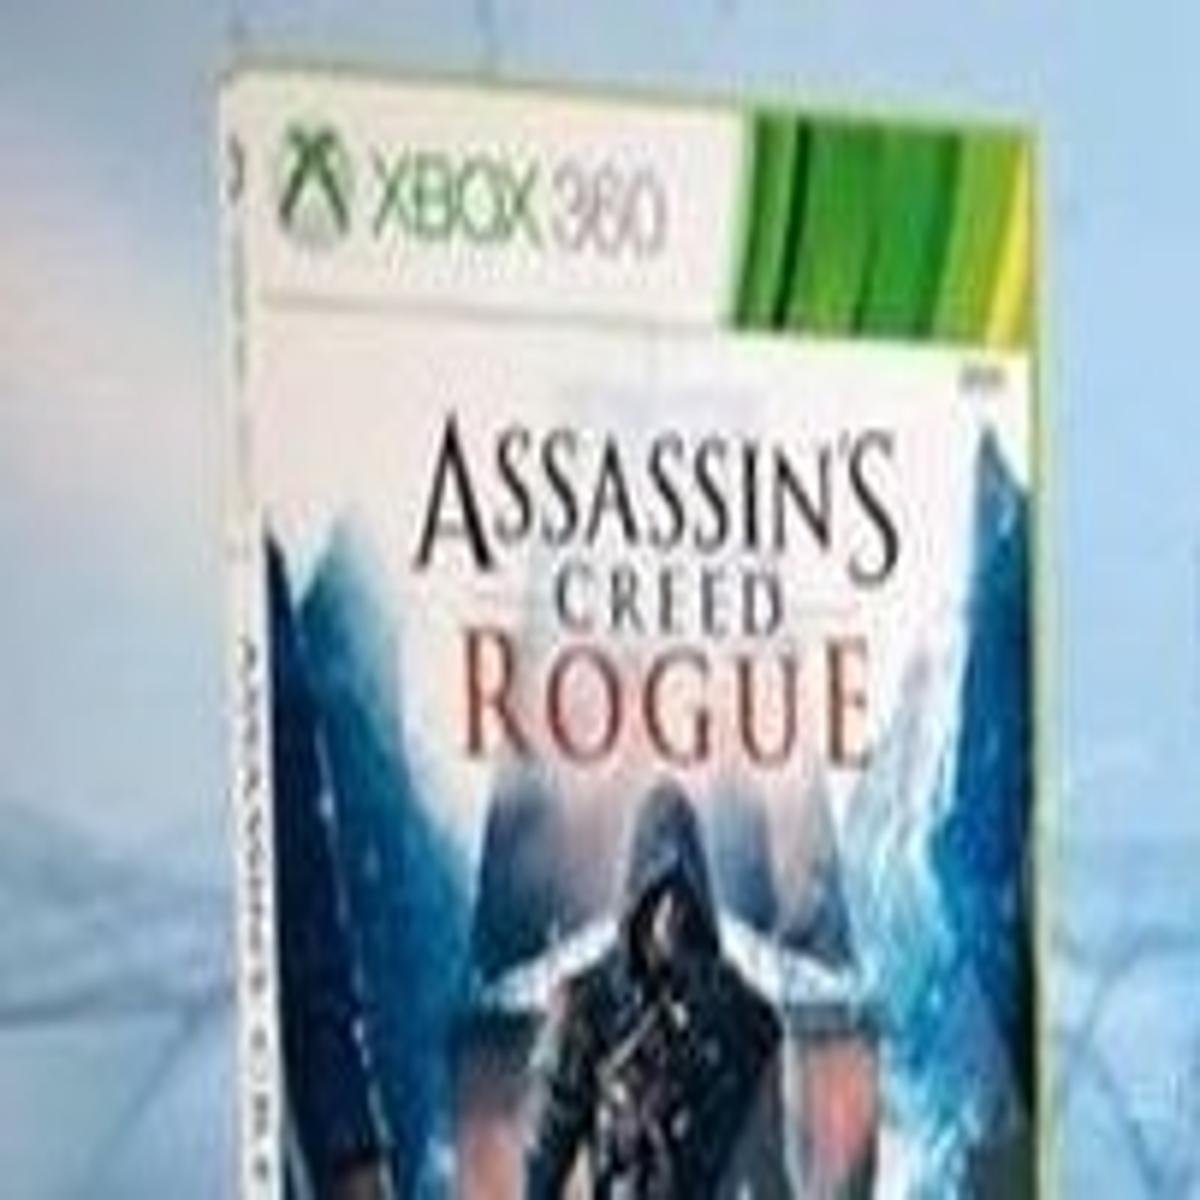 Assassin's Creed Rogue- Xbox 360